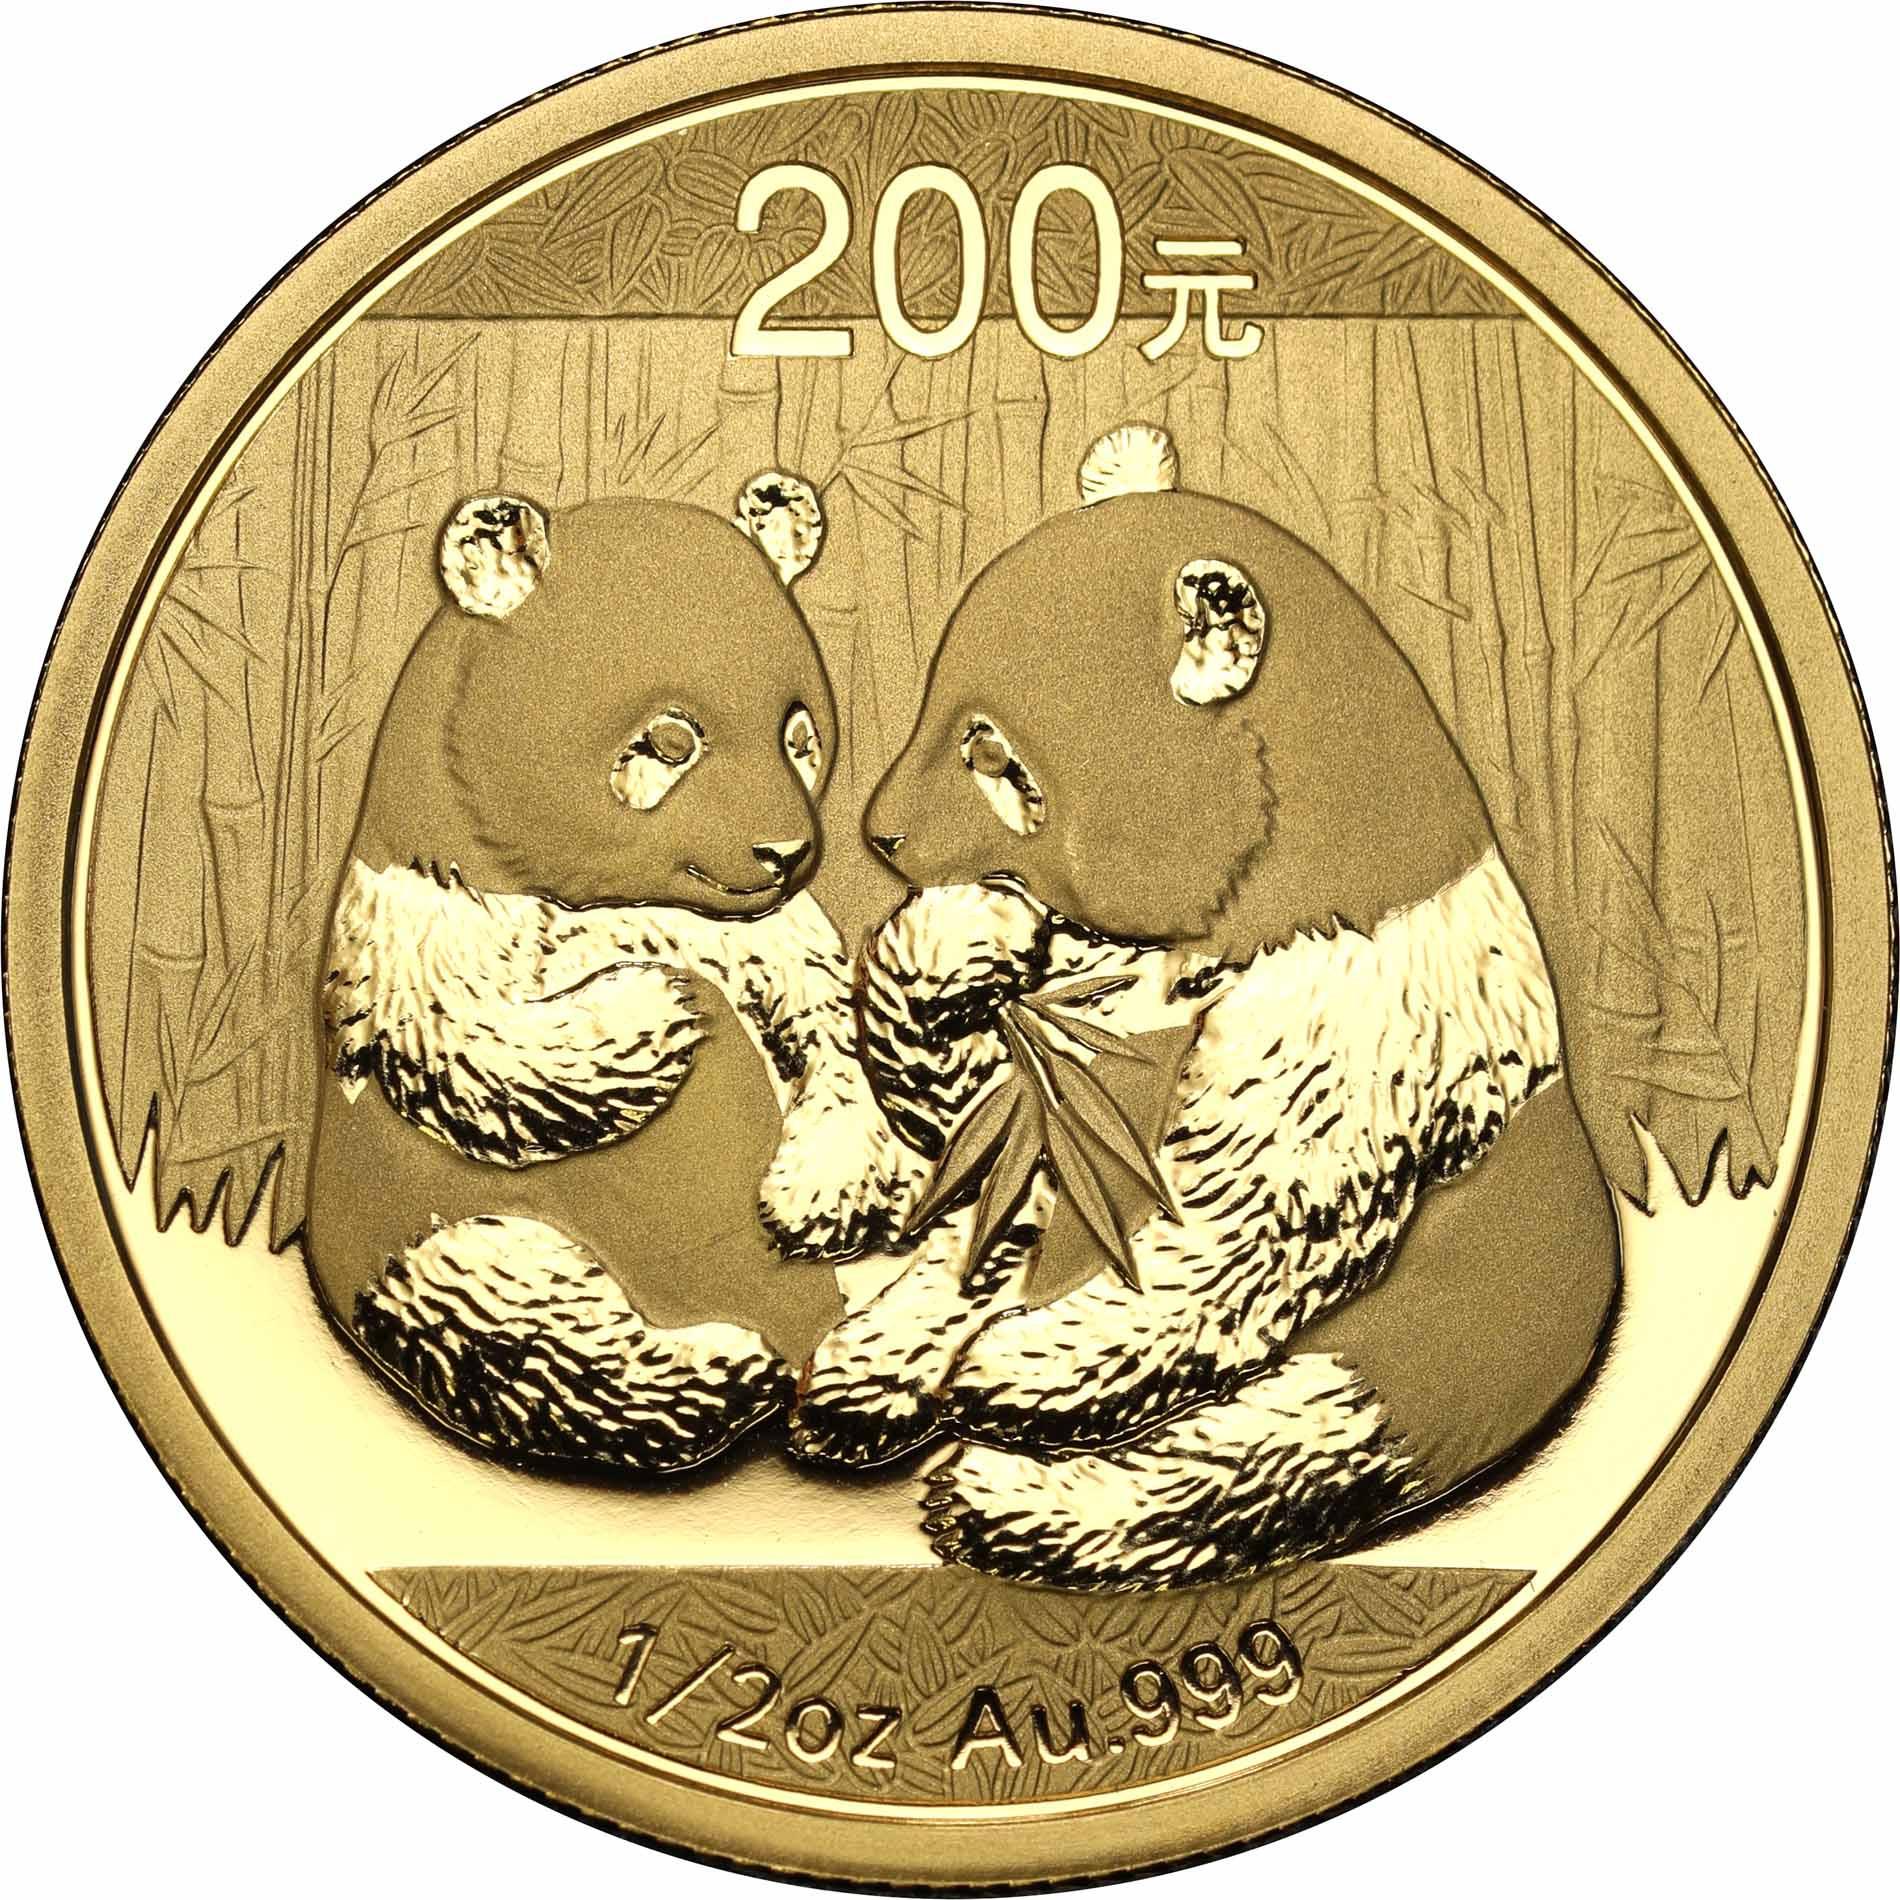 Chiny 200 Yuan (juanów) 2009 Panda Wielka 1/2 uncji złota